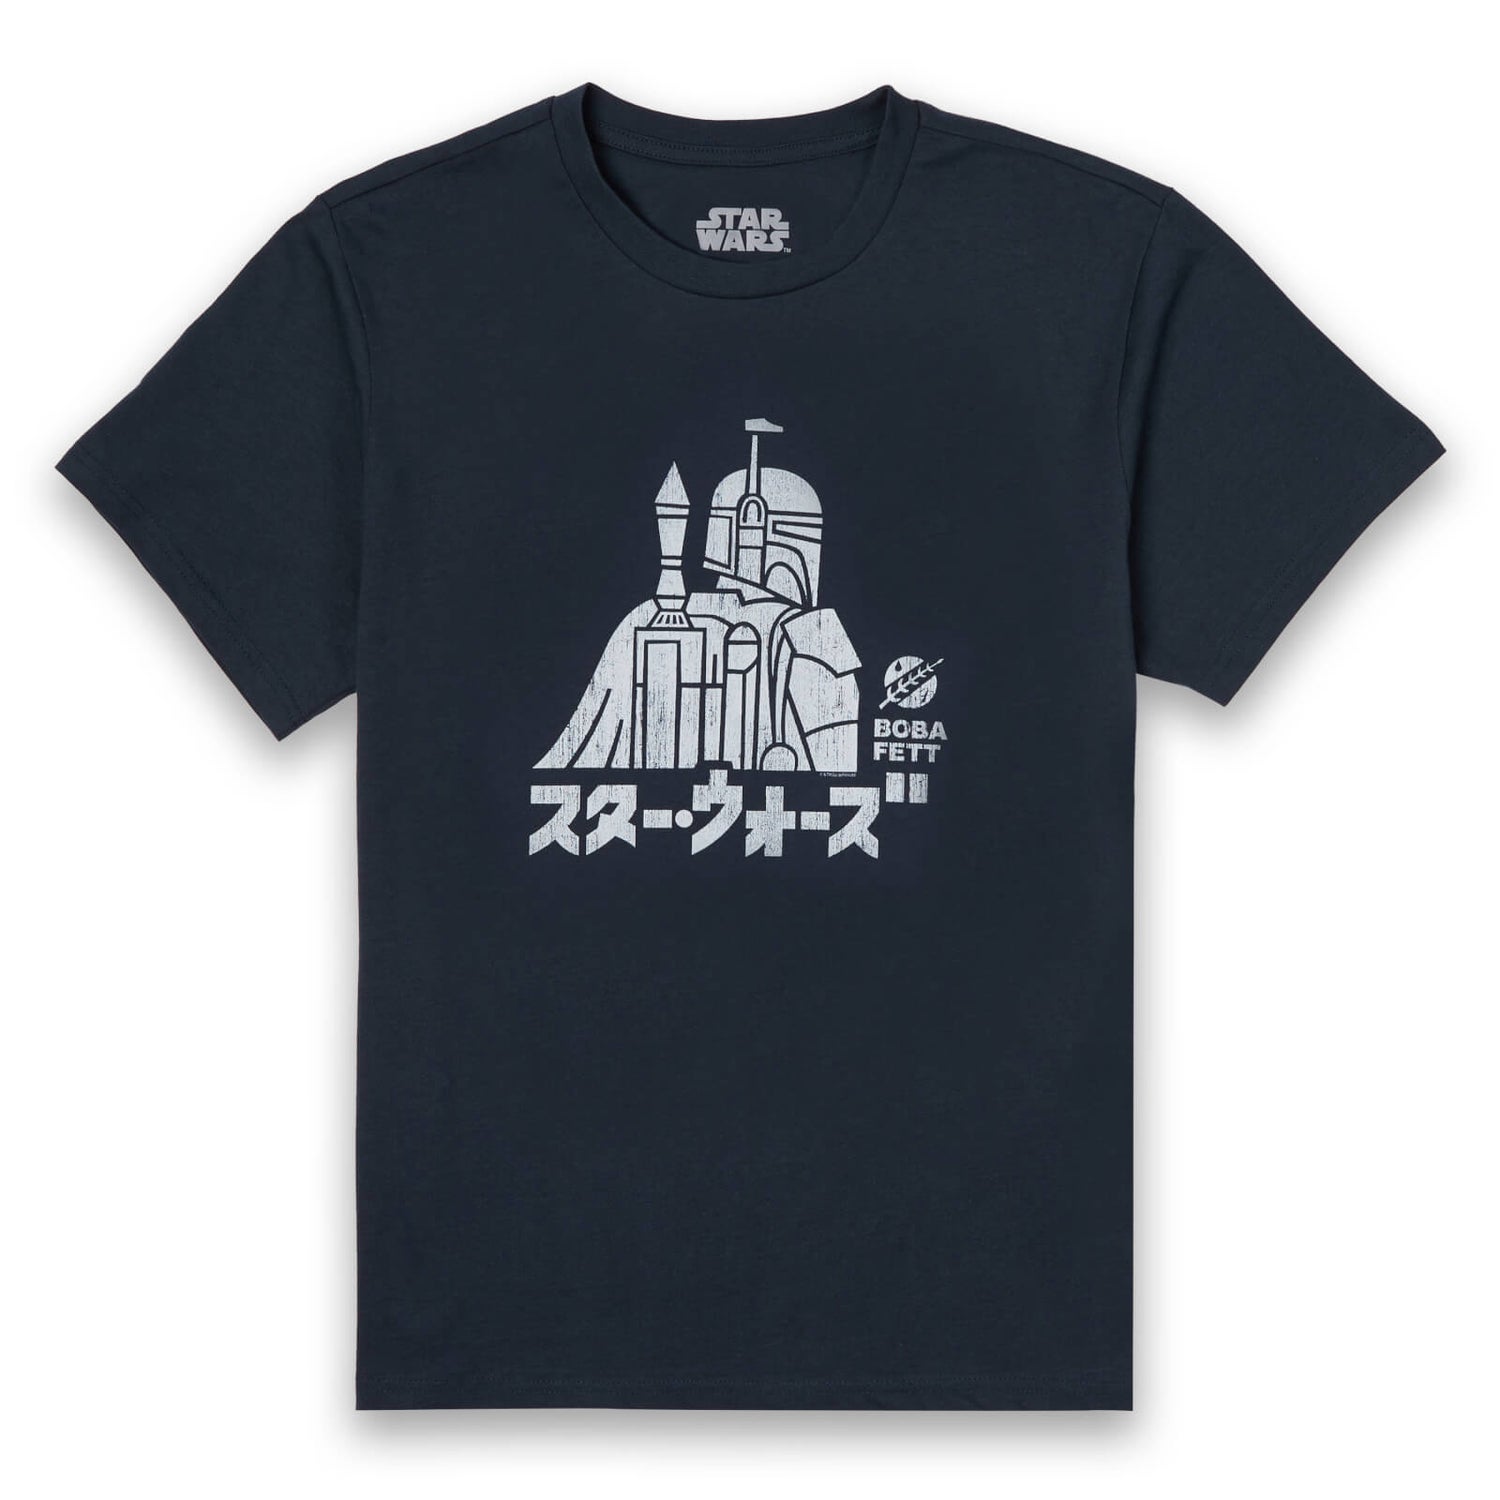 Star Wars Kana Boba Fett Unisex T-Shirt - Navy